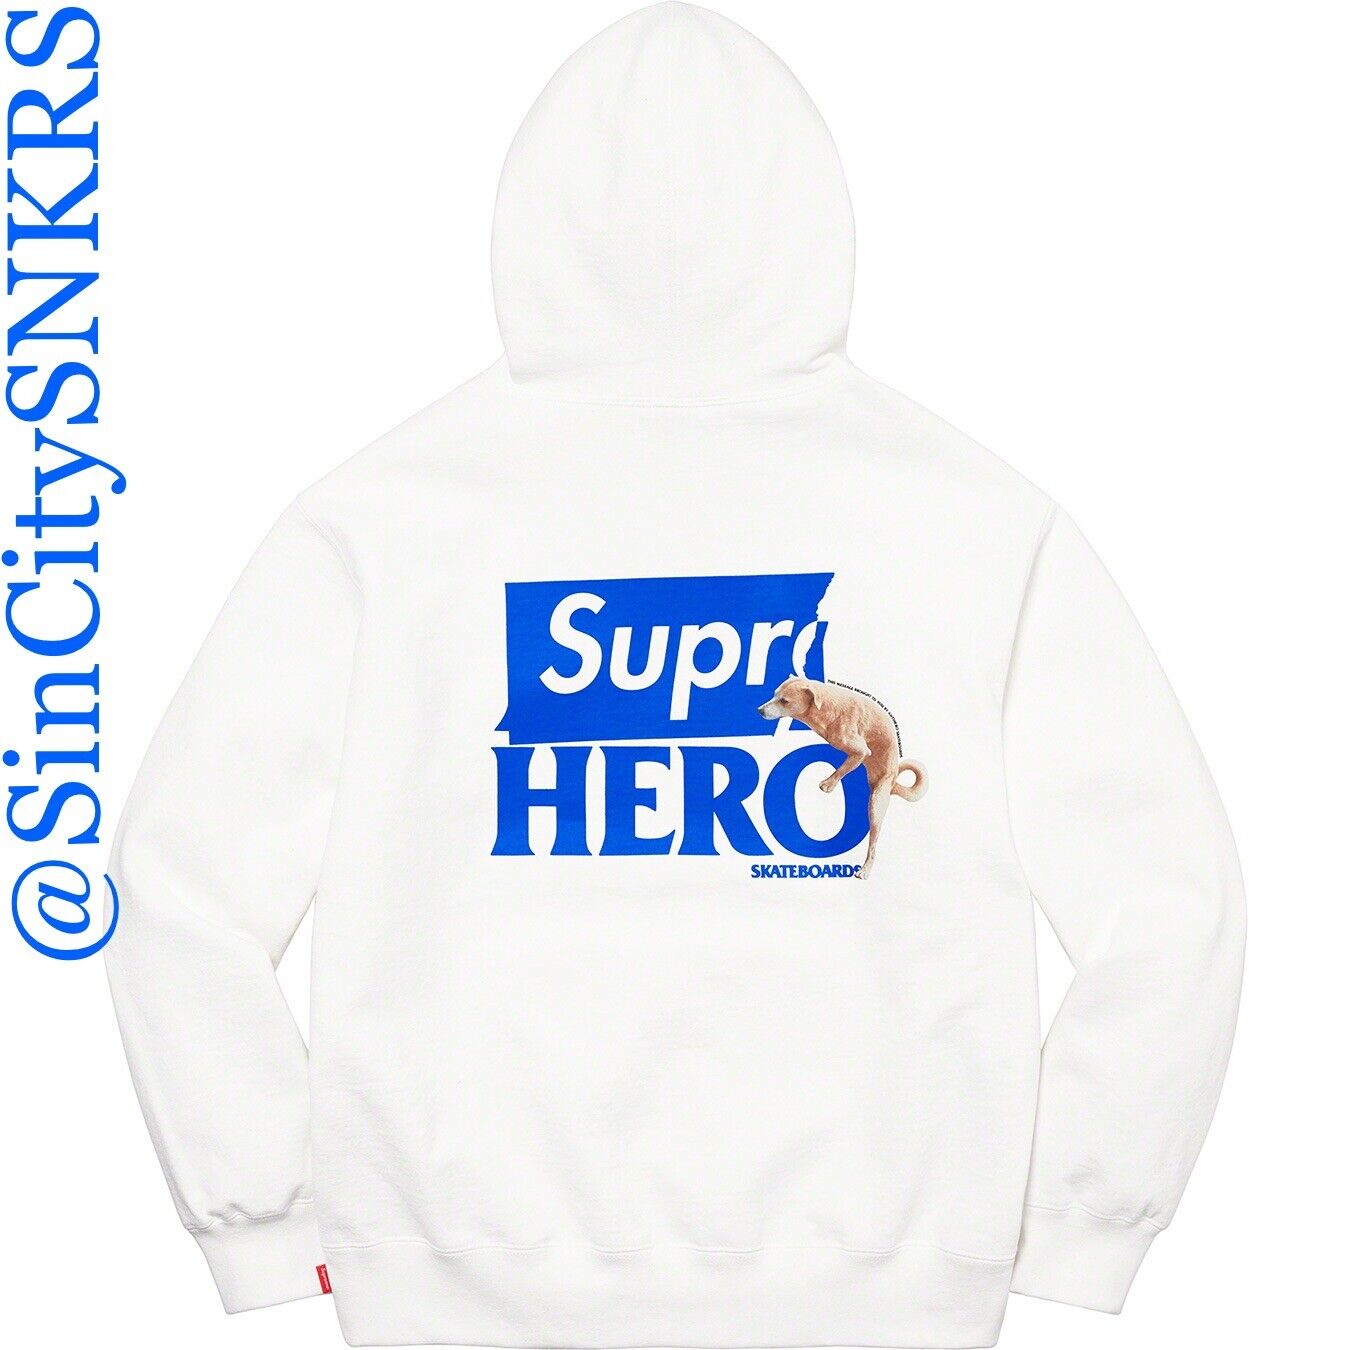 Supreme Anti Hero Hooded Sweatshirt White Size Medium - New In Wrapper